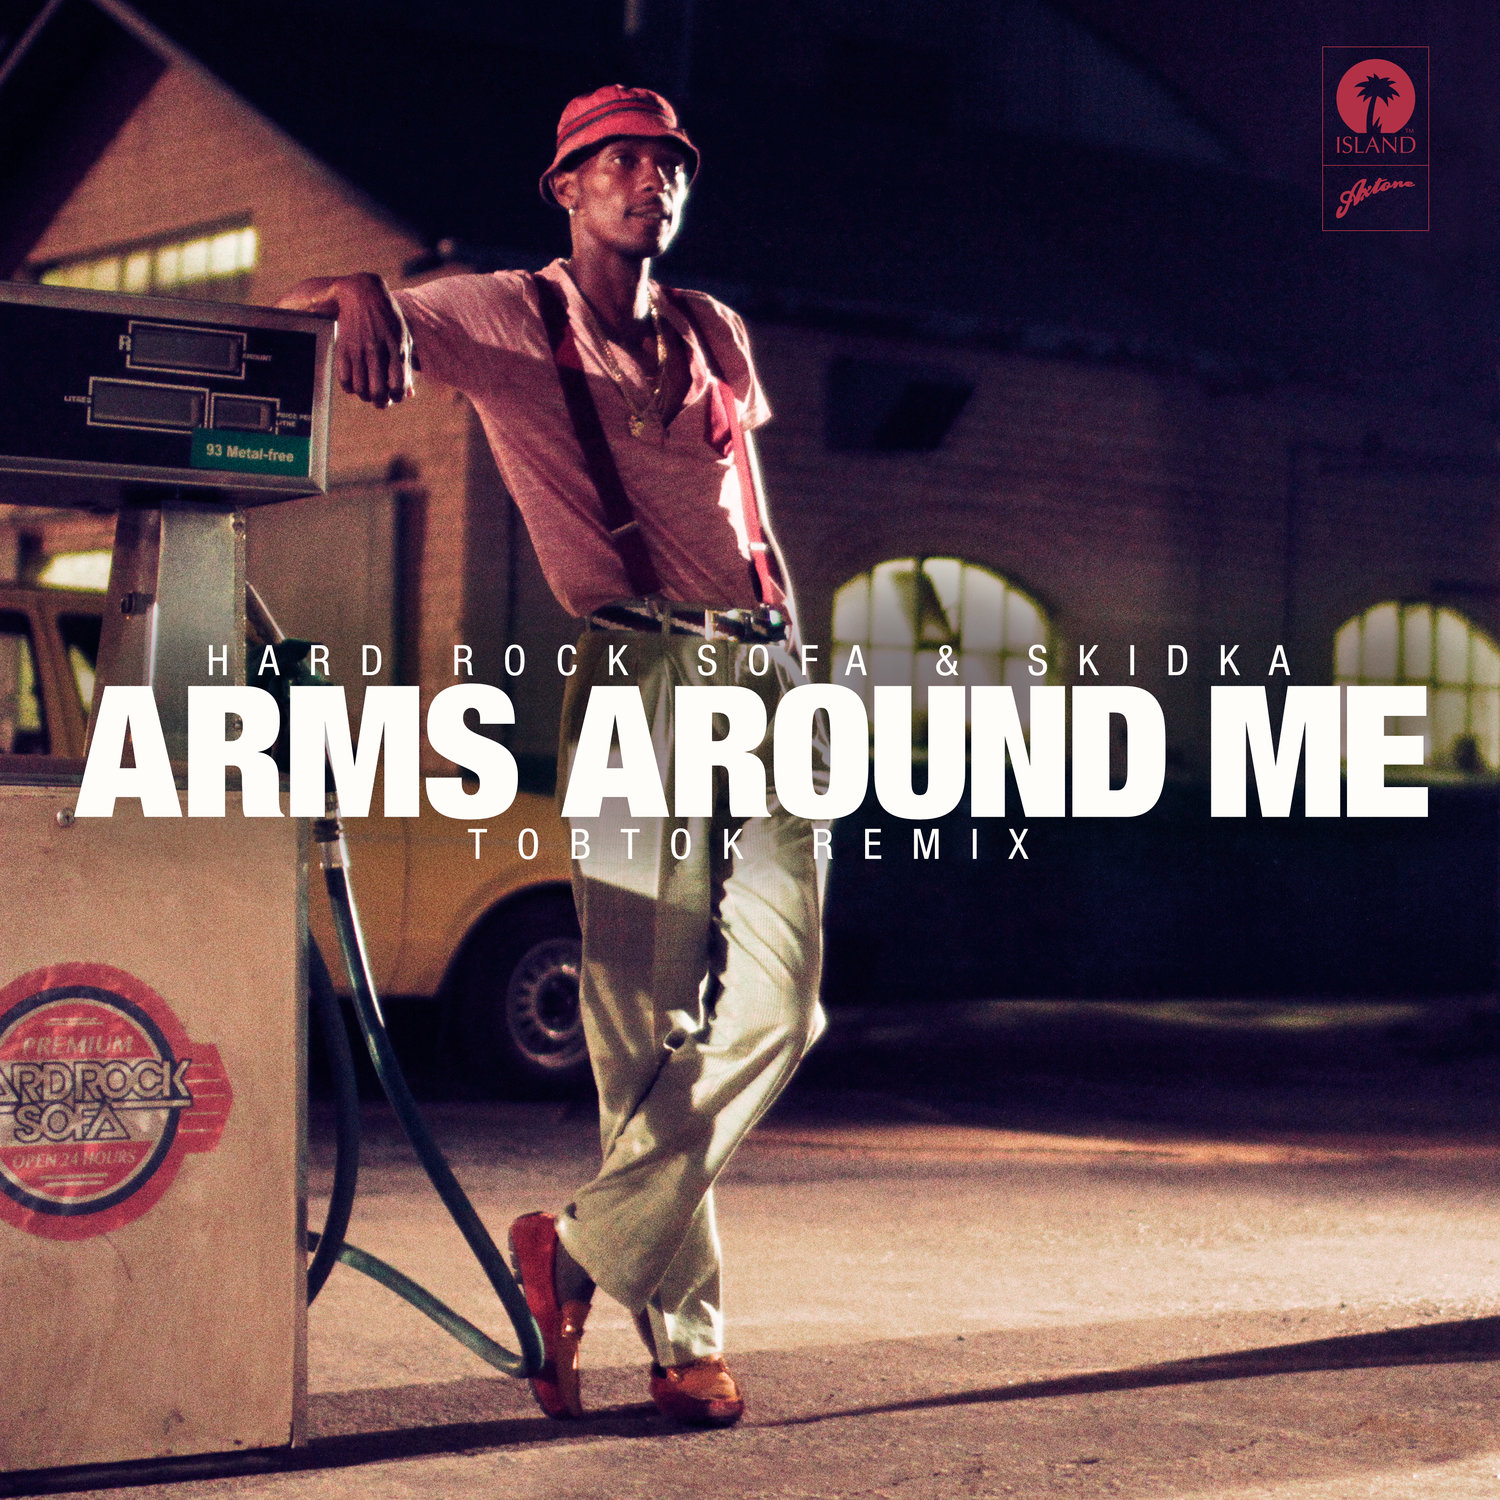 Arms around me. Hard Rock Sofa.